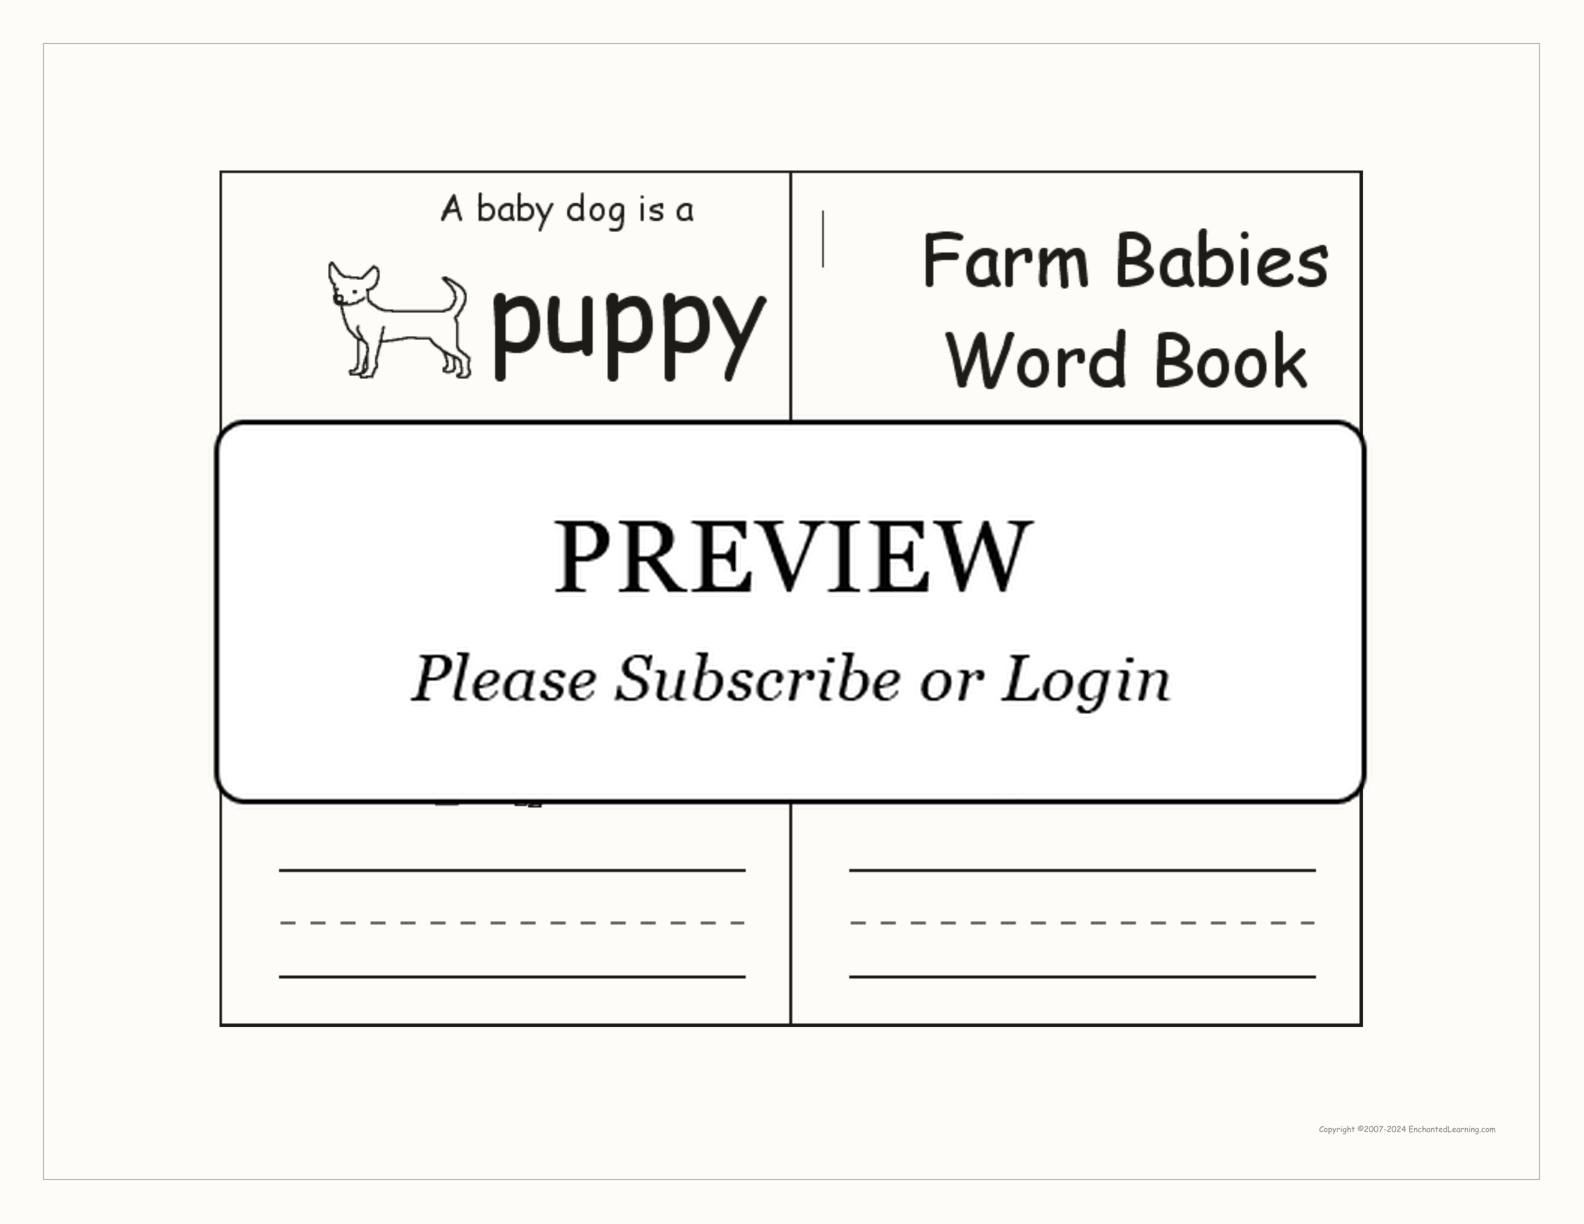 Farm Babies Word Book interactive printout page 1